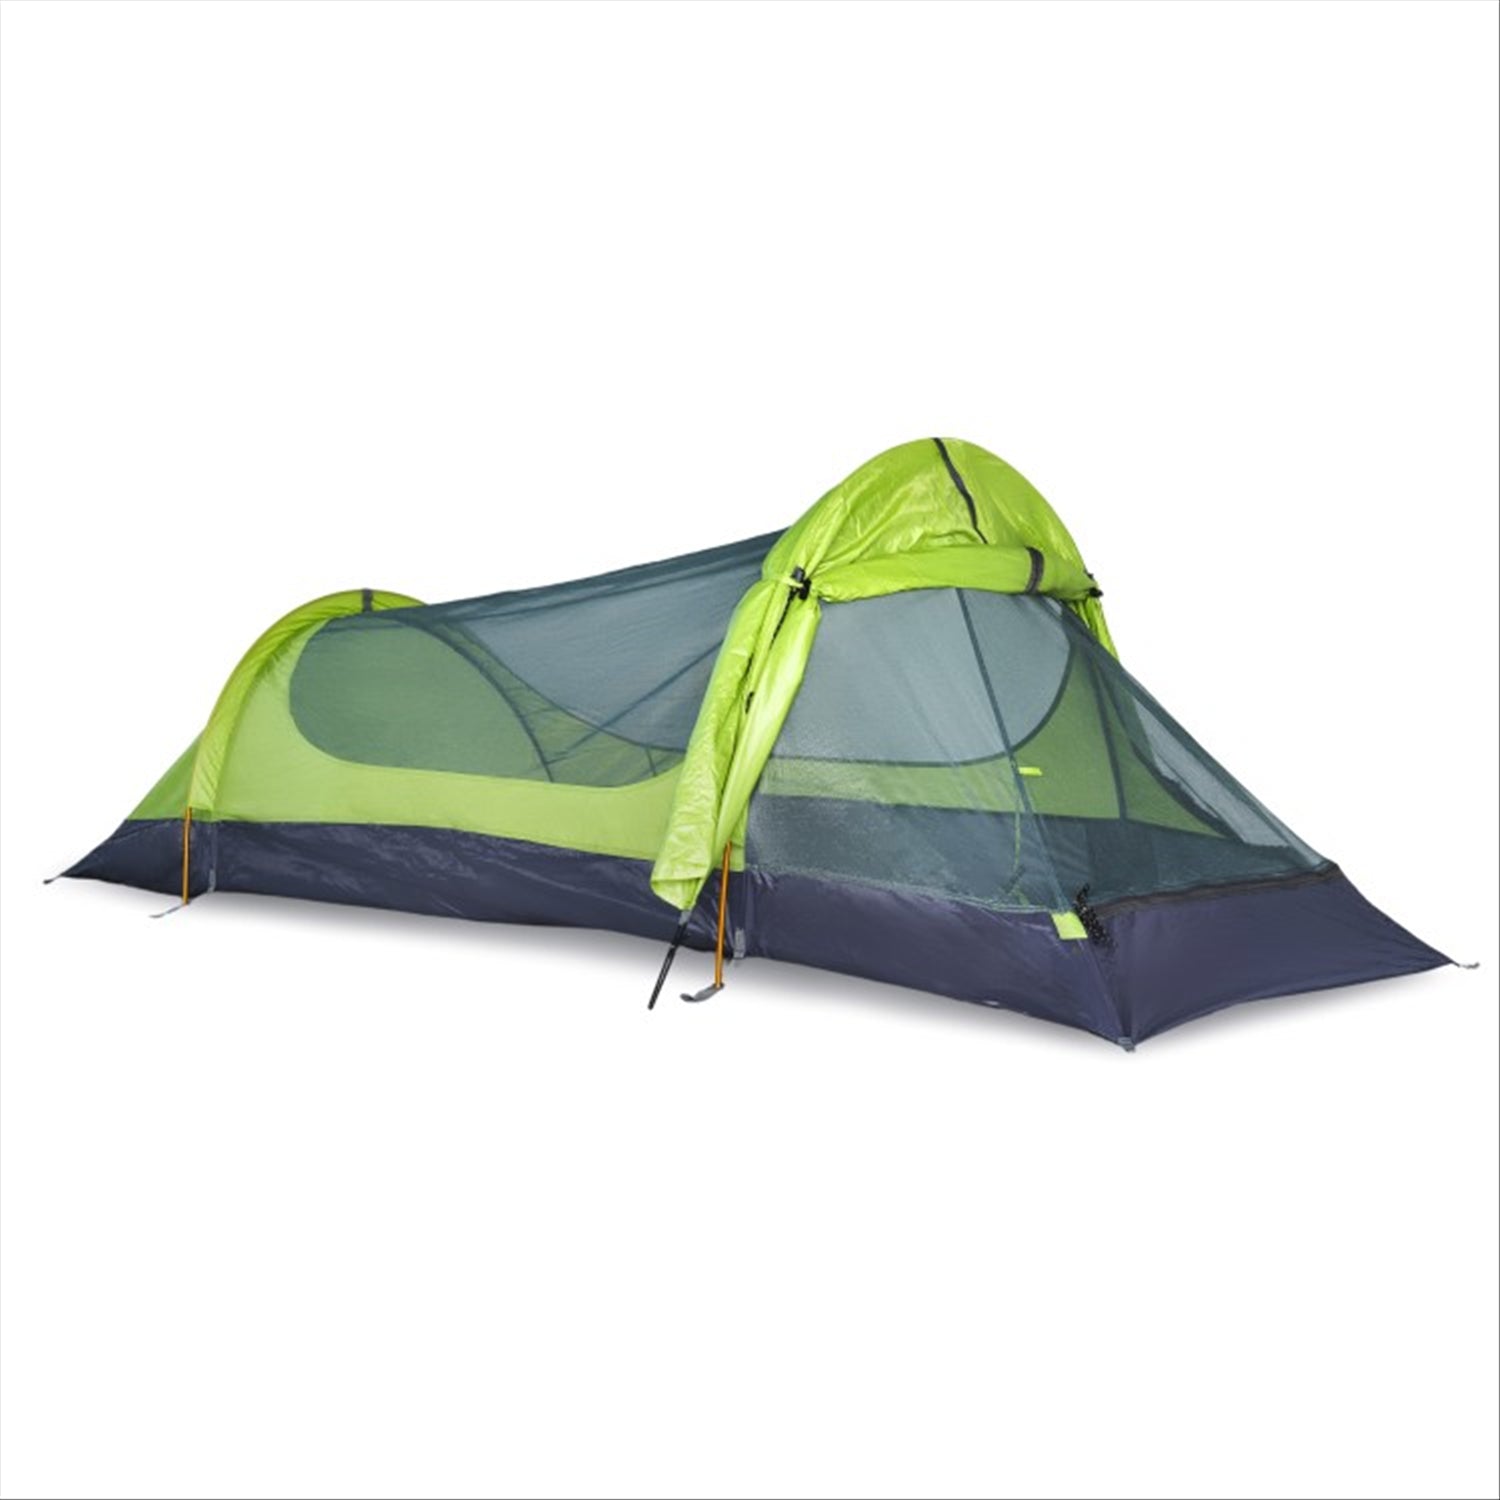 Ranger 1 - Lightweight 1 Person Backpacking Tent, 1.35kg